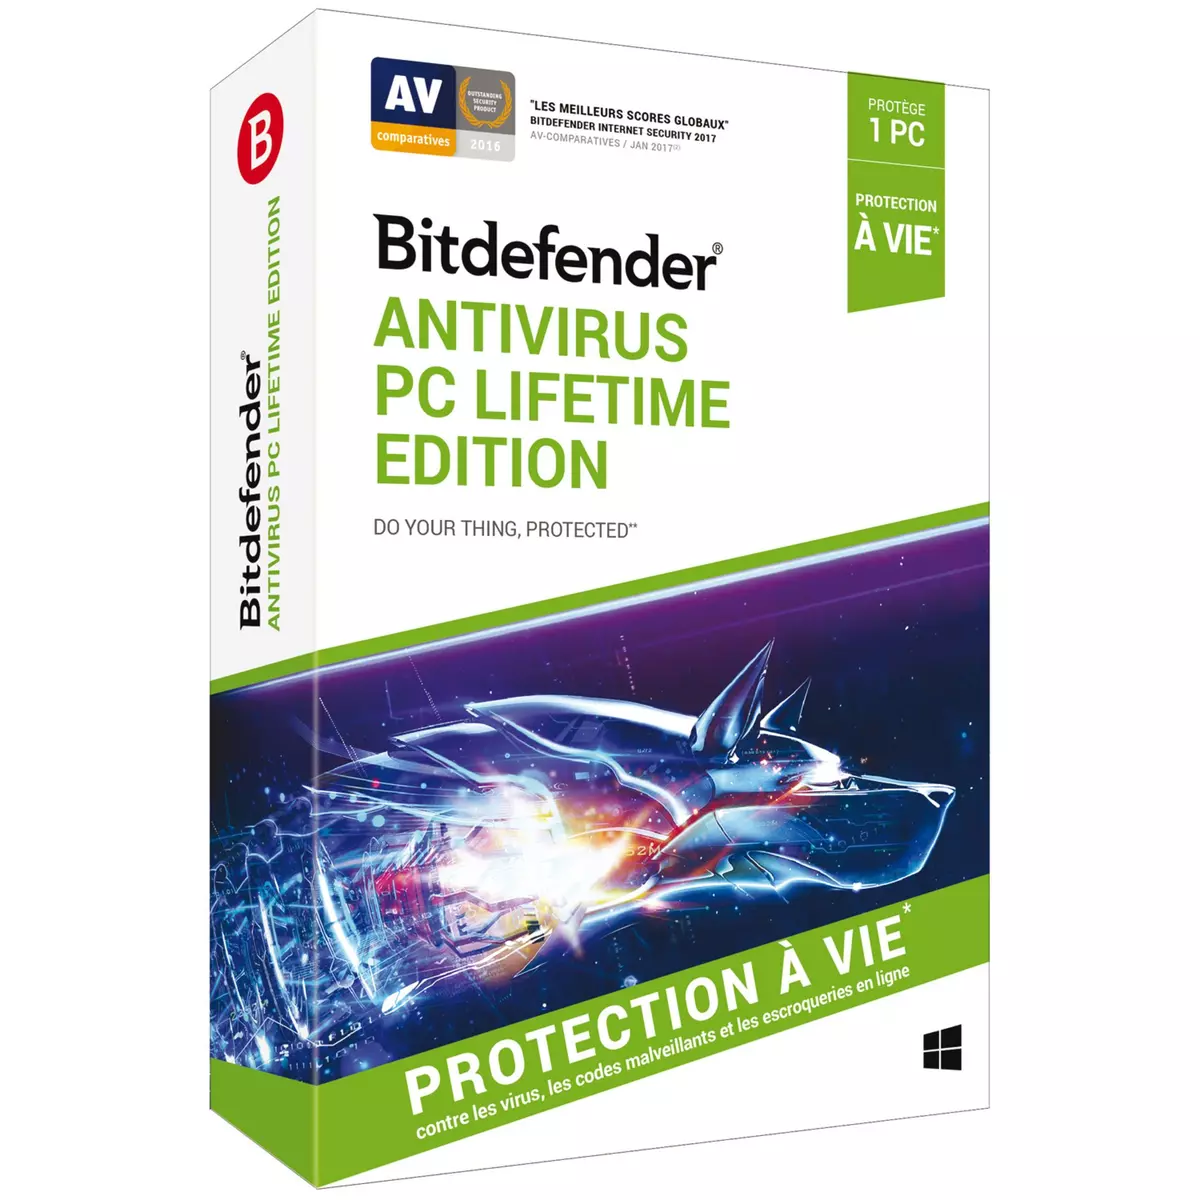 Bitdefender Antivirus PC Lifetime 2018 - Licence à vie 1 poste